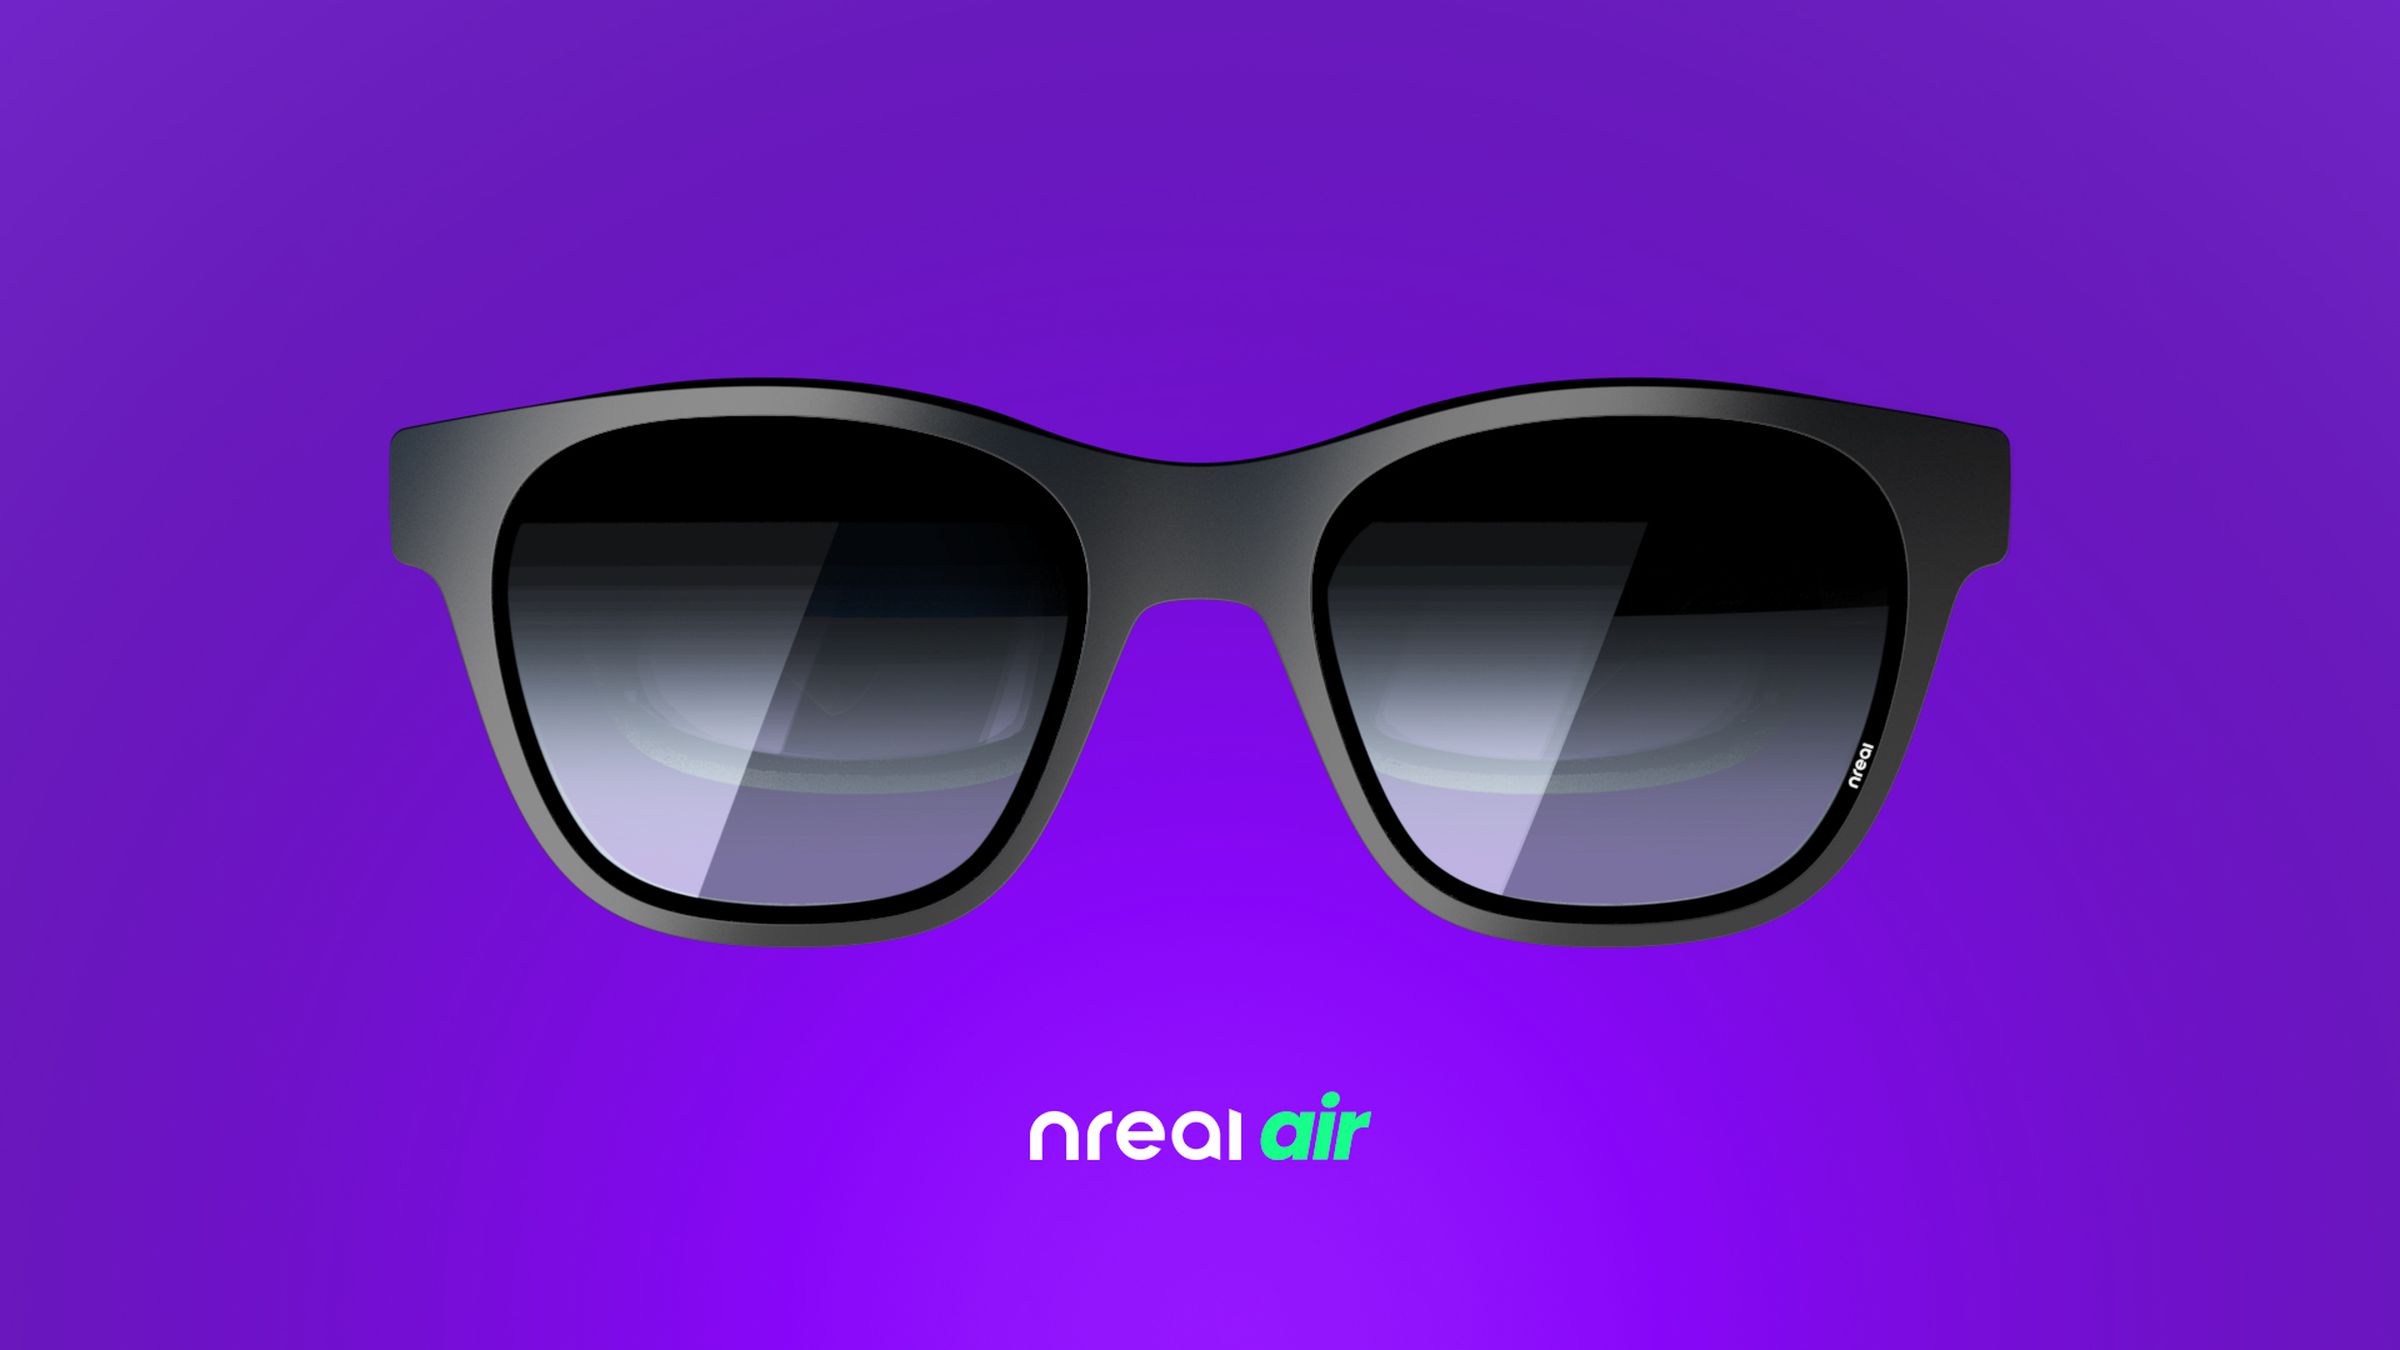 Nreal Air AR glasses